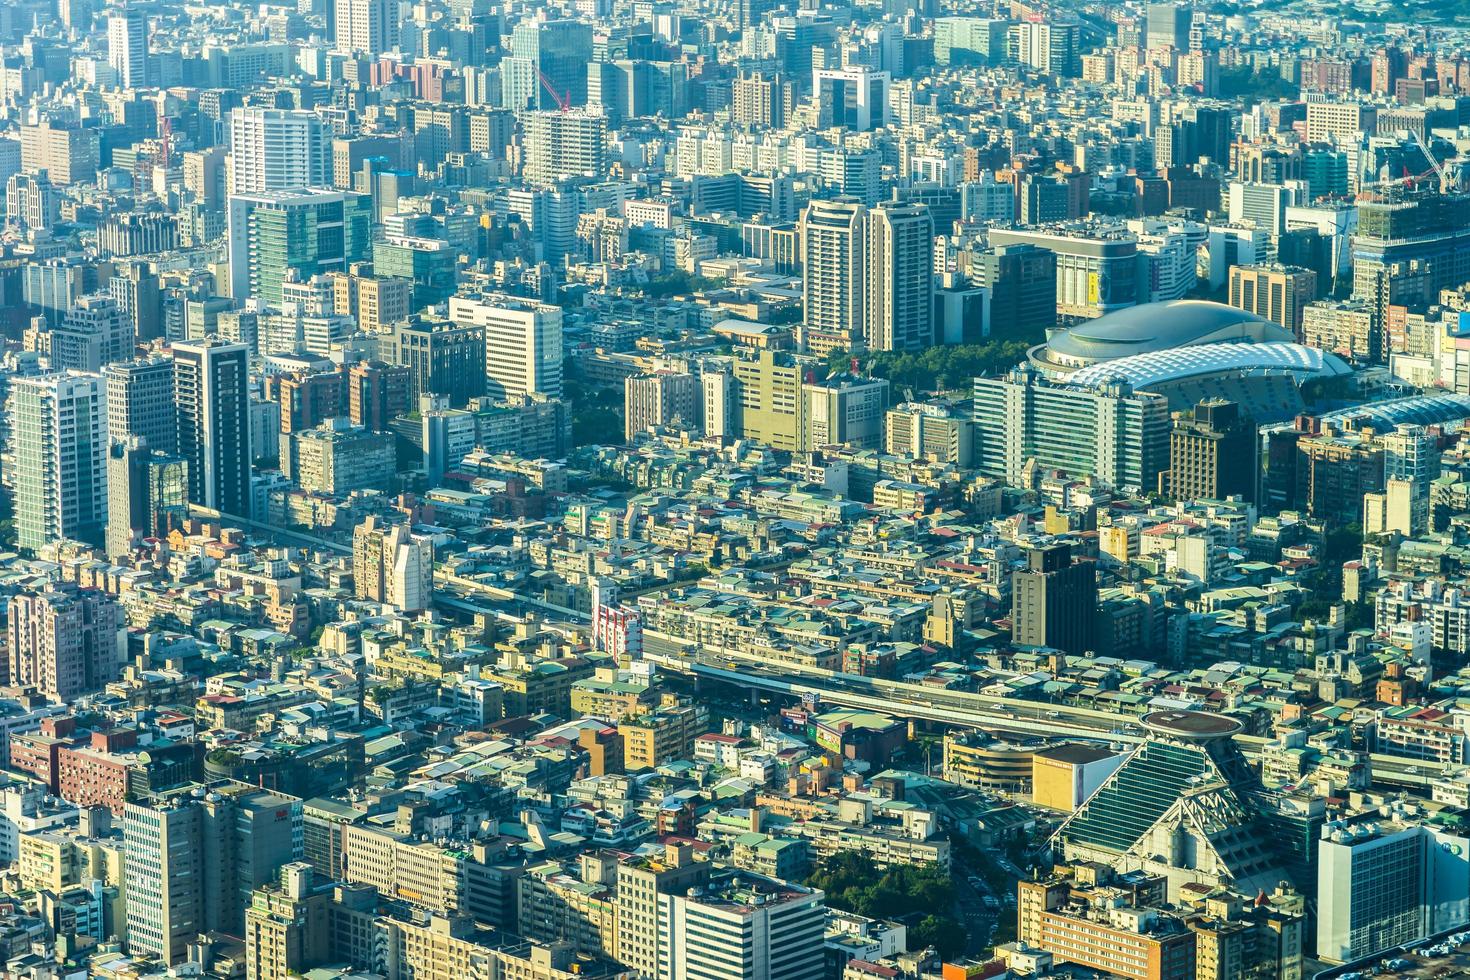 stadsbilden i Taipei stad i Taiwan foto